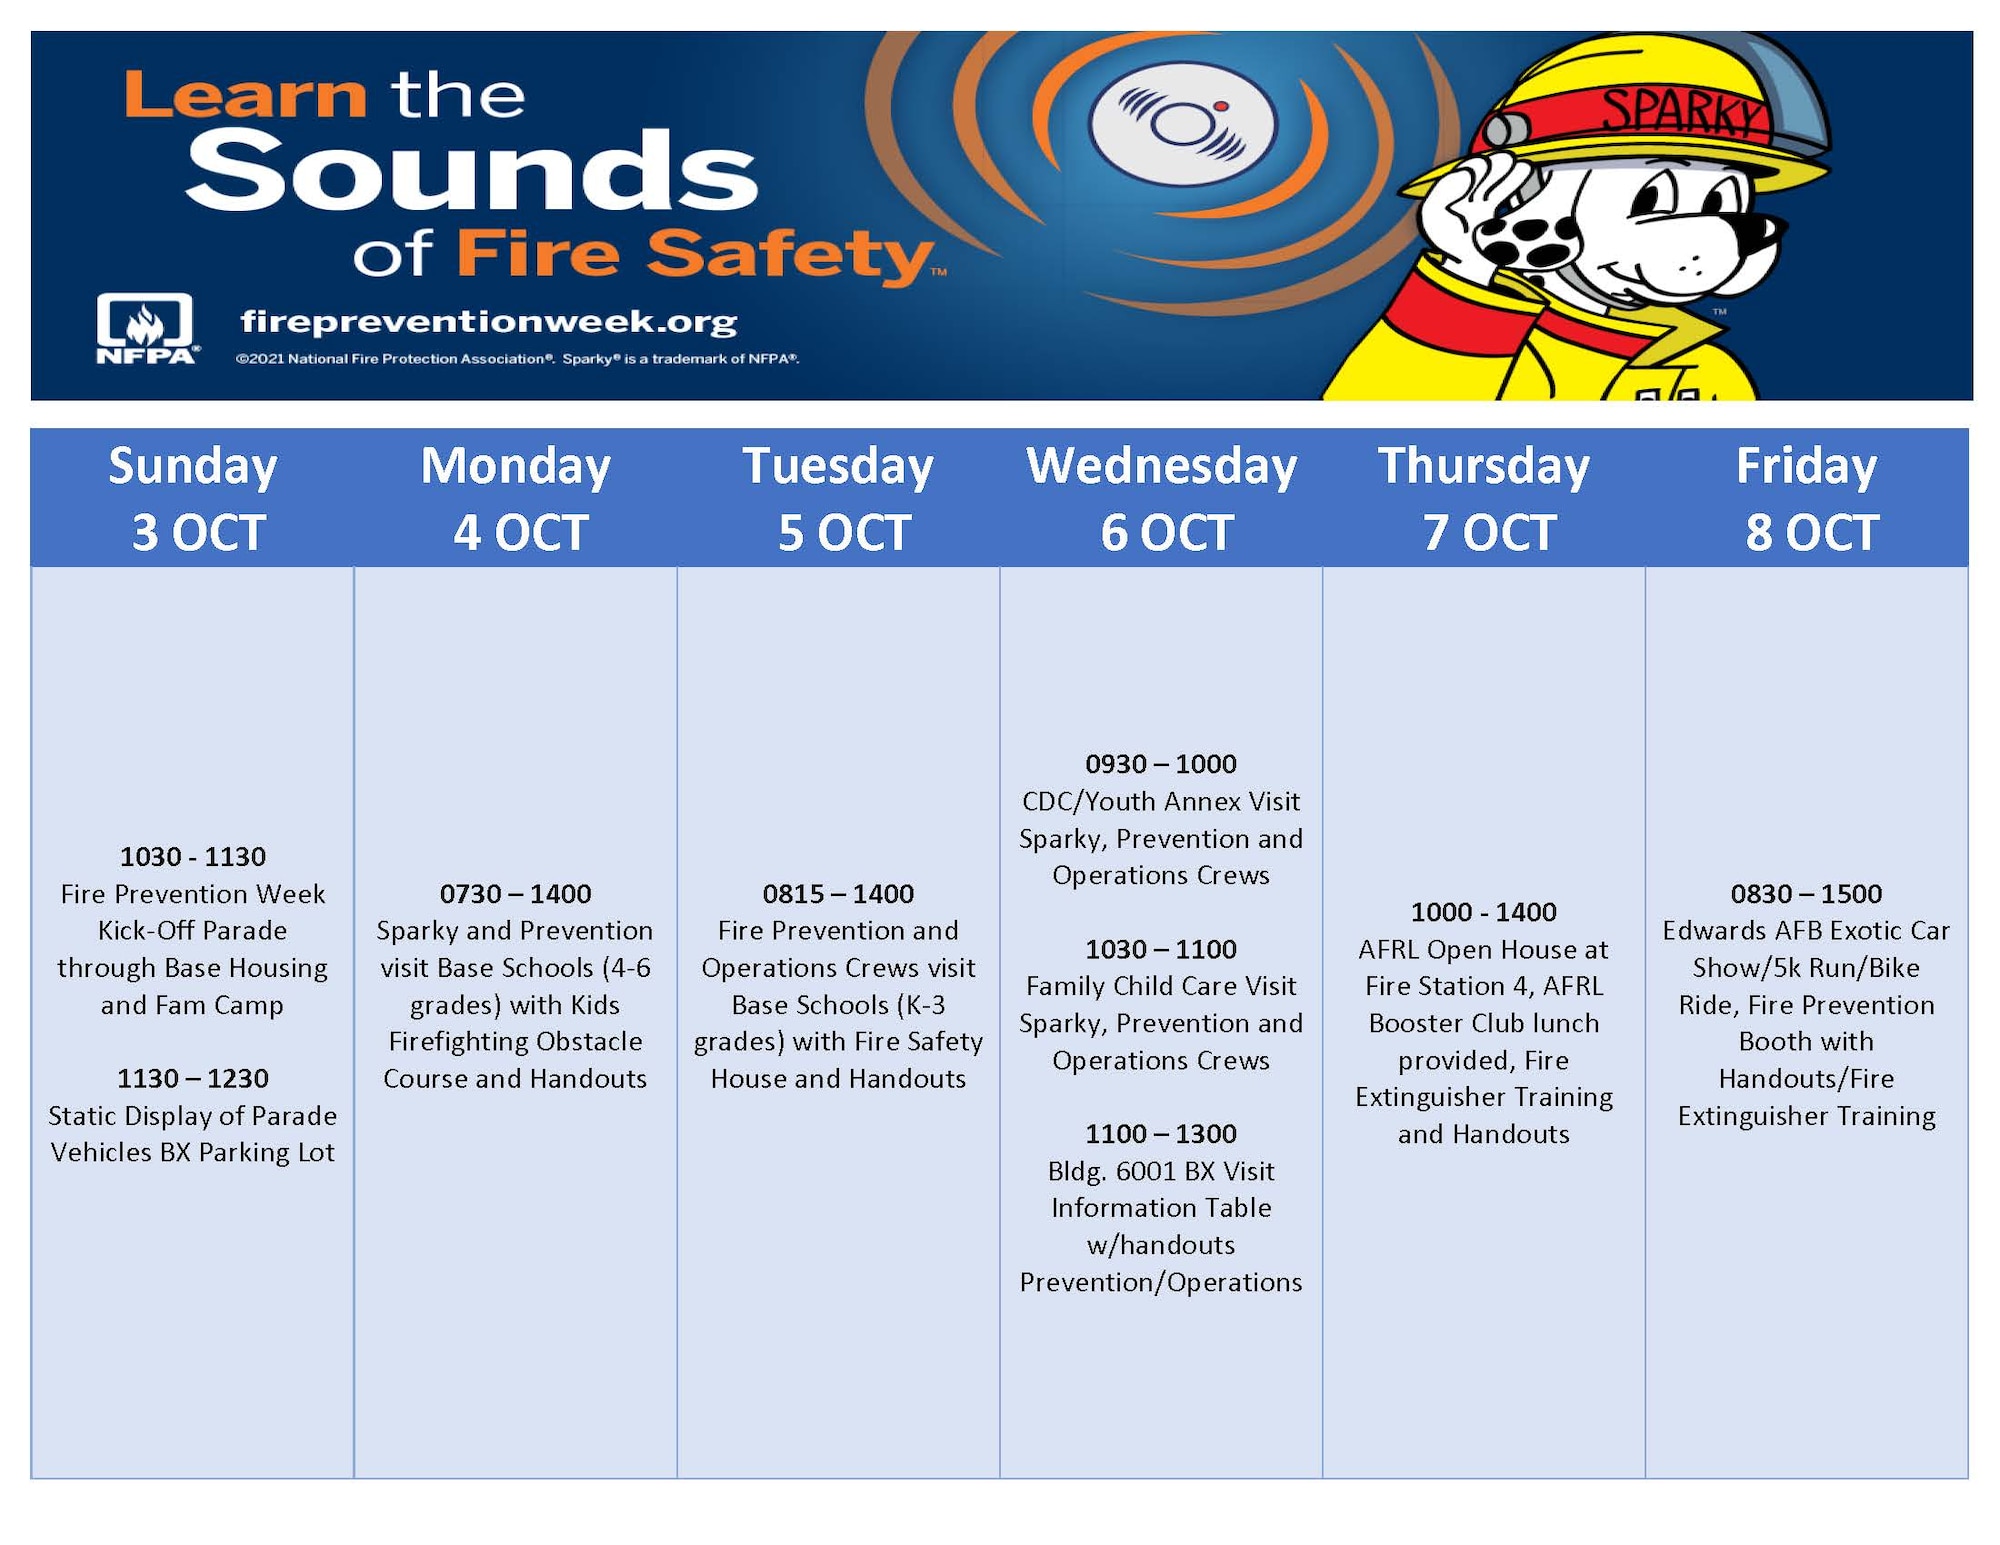 Fire Prevention Week 2021, Oct. 3-9